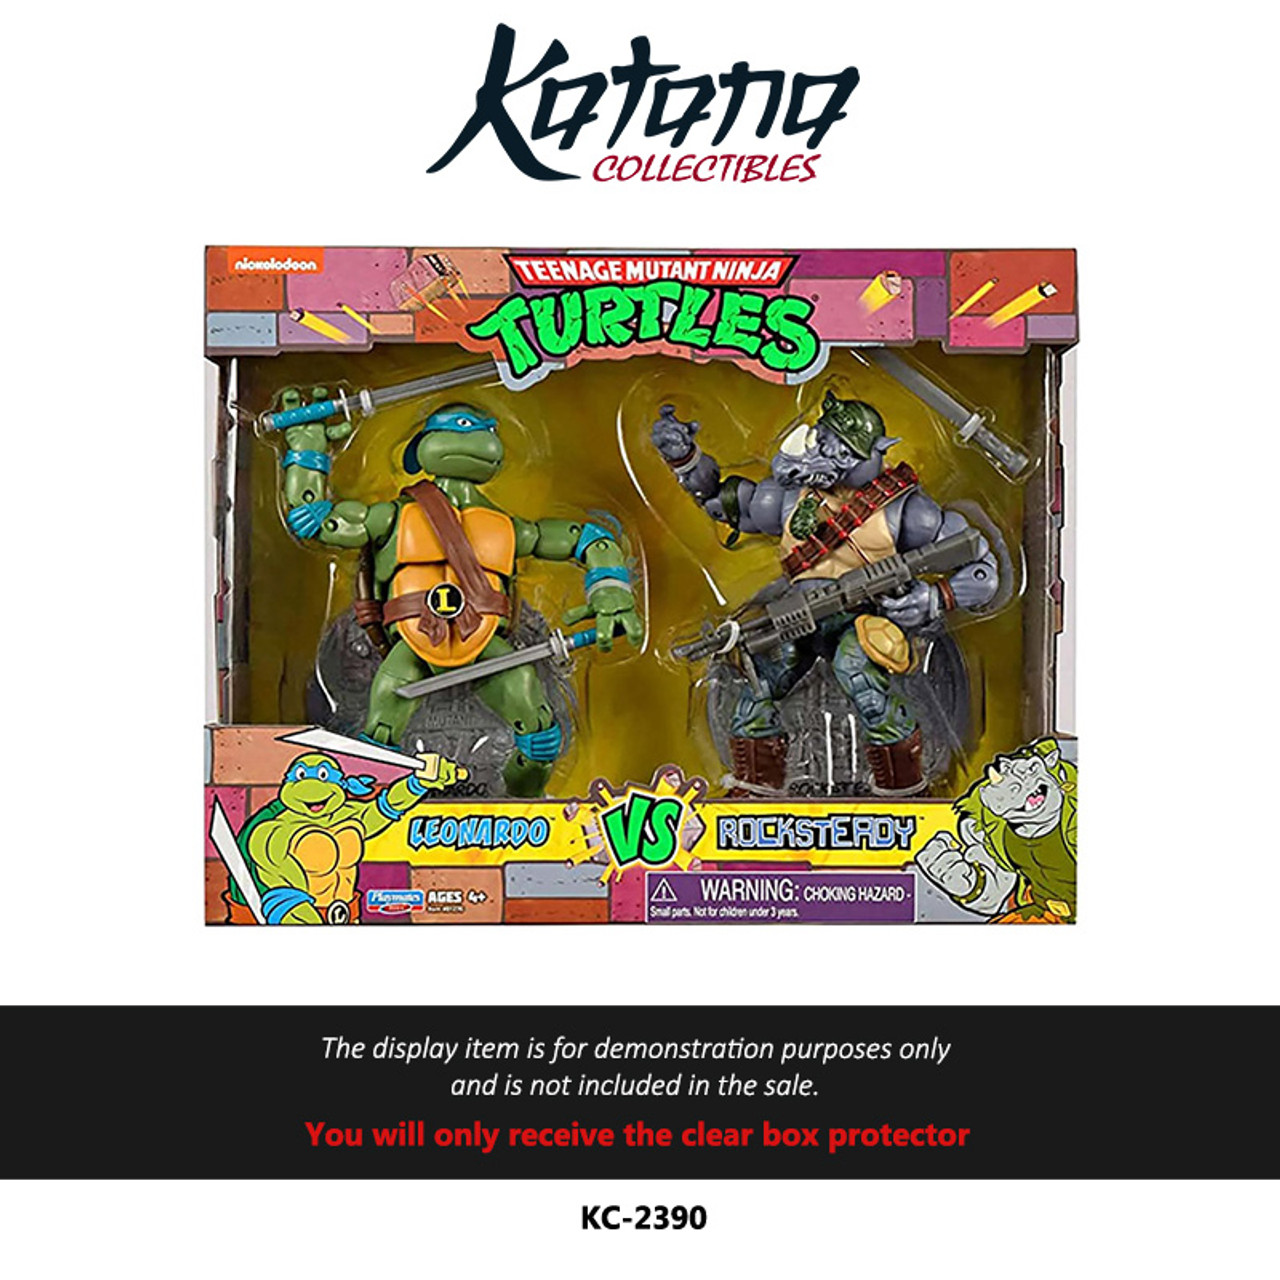 Katana Collectibles Protector For Teenage Mutant Ninja Turtles Classic Leonardo vs. Rocksteady 2-Pack Figures